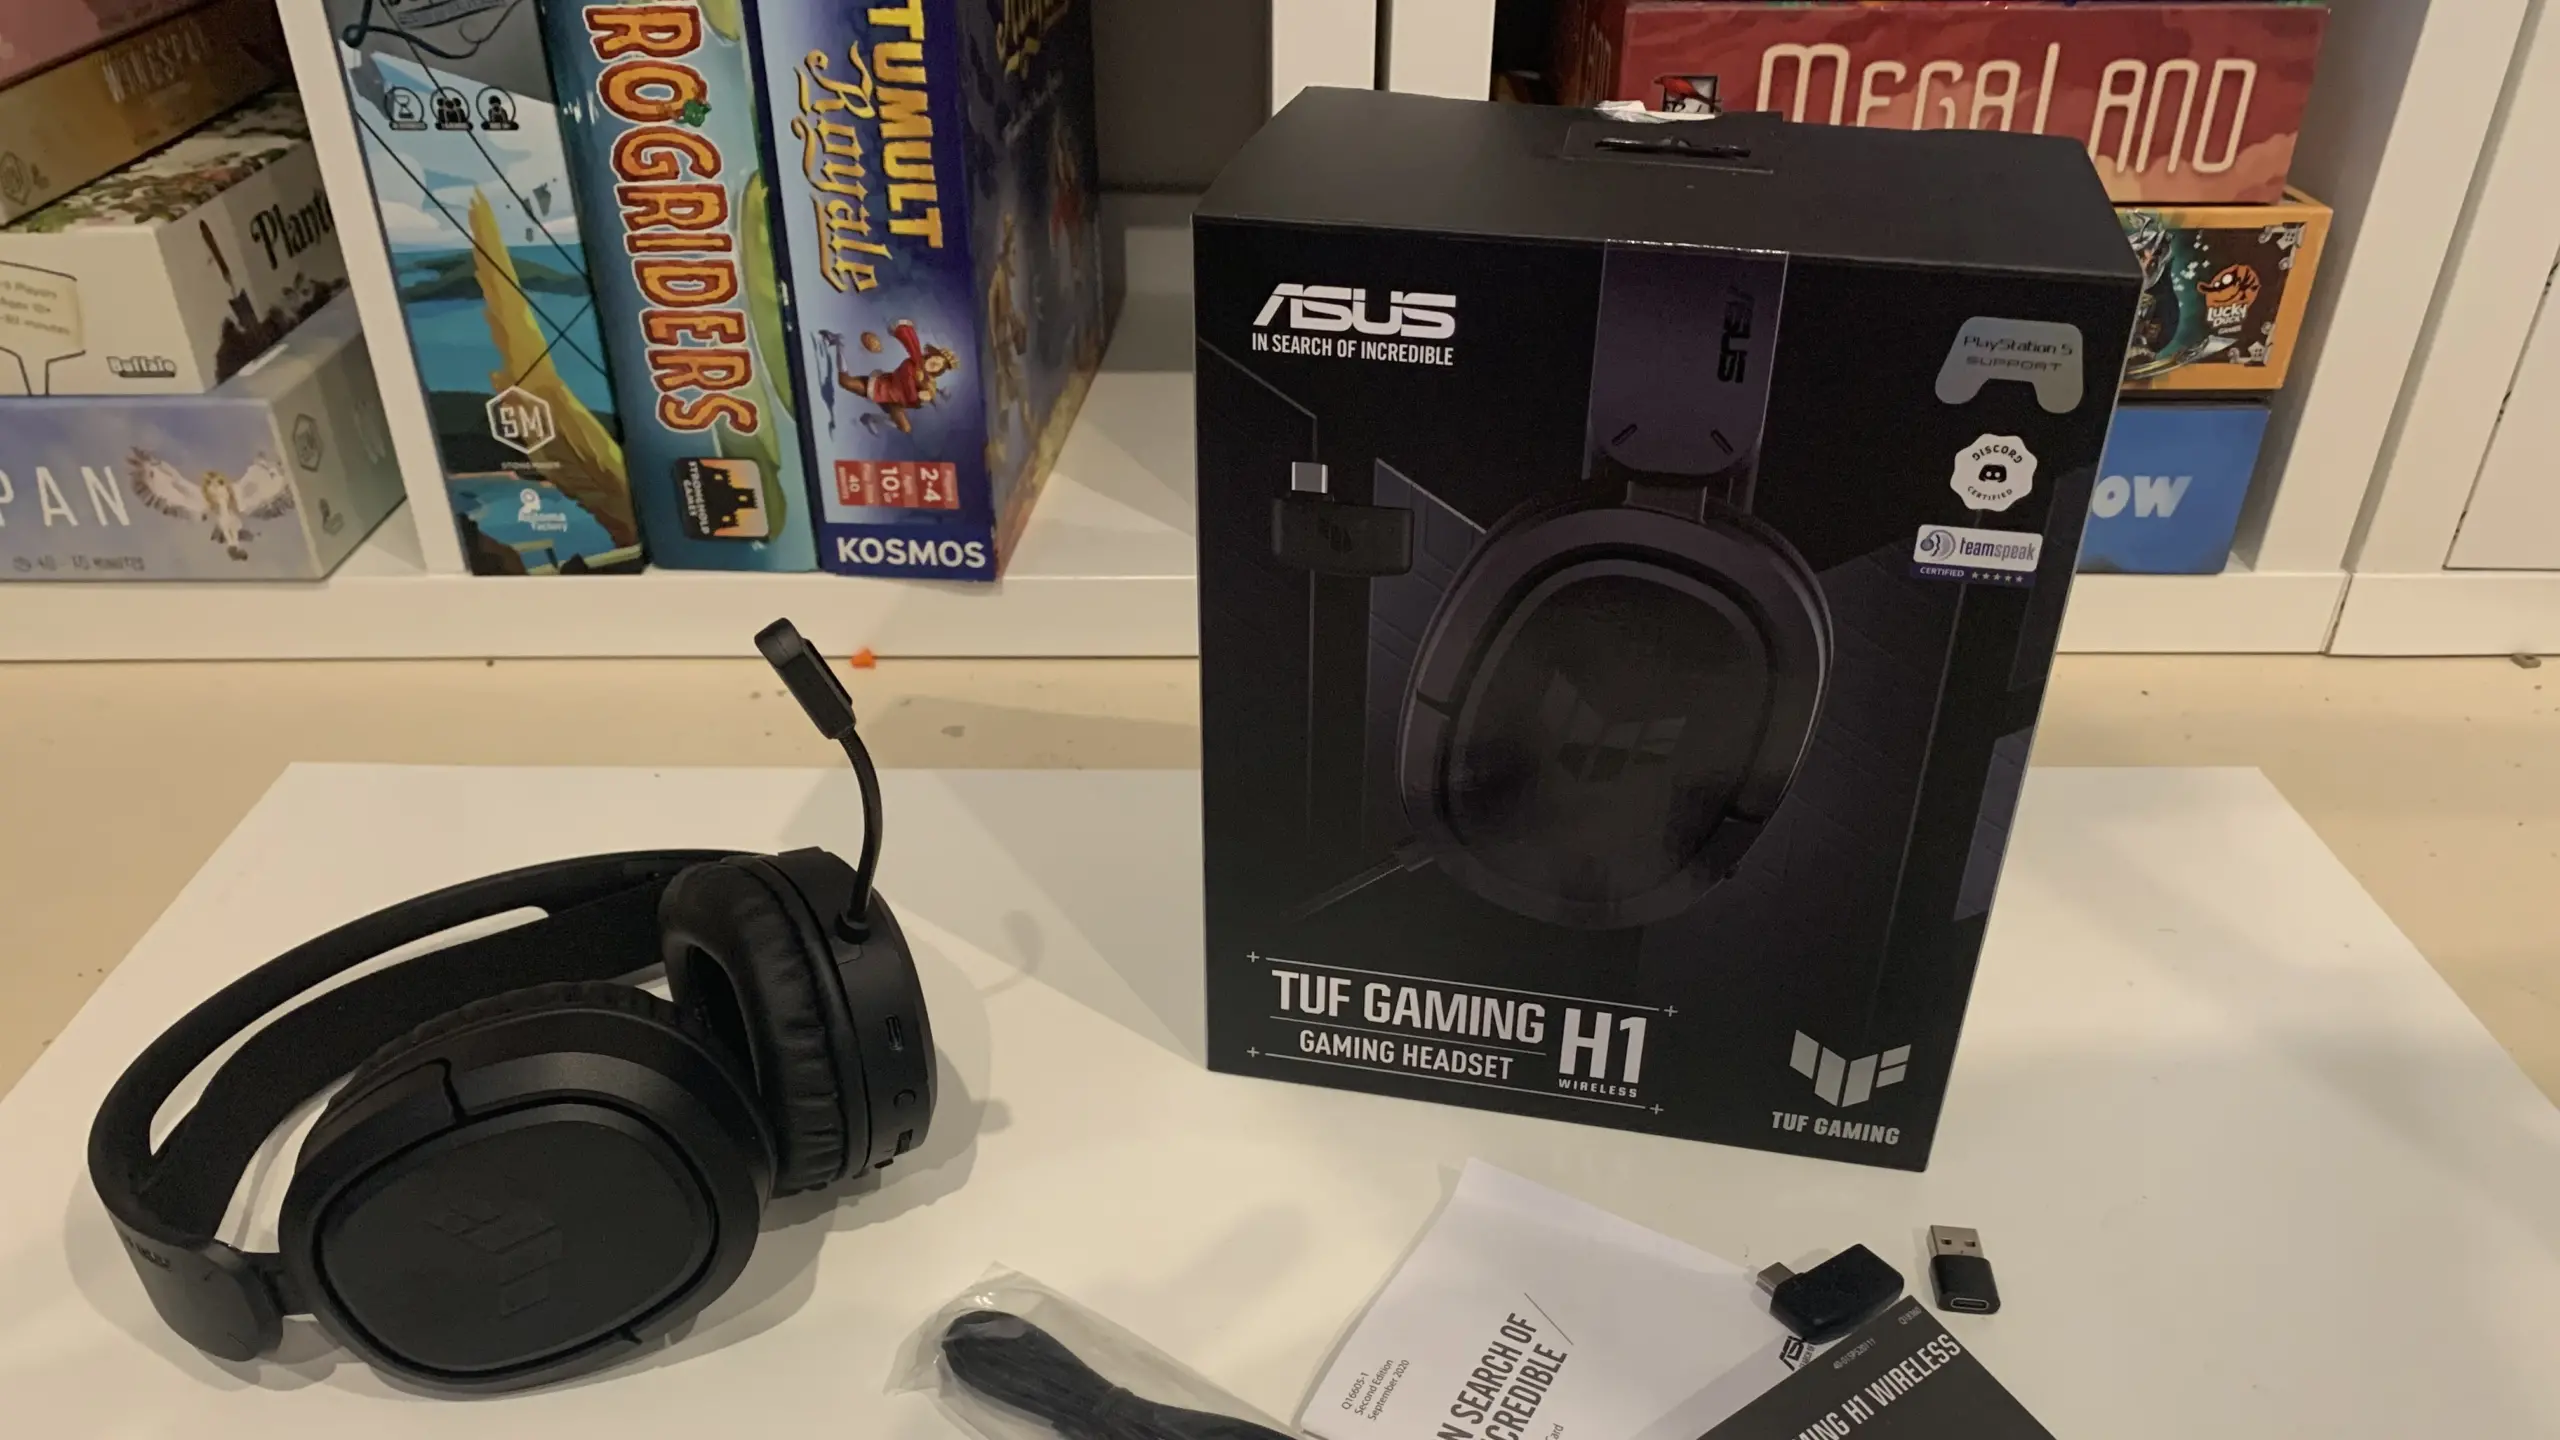 ASUS TUF Gaming H3 Headset Review